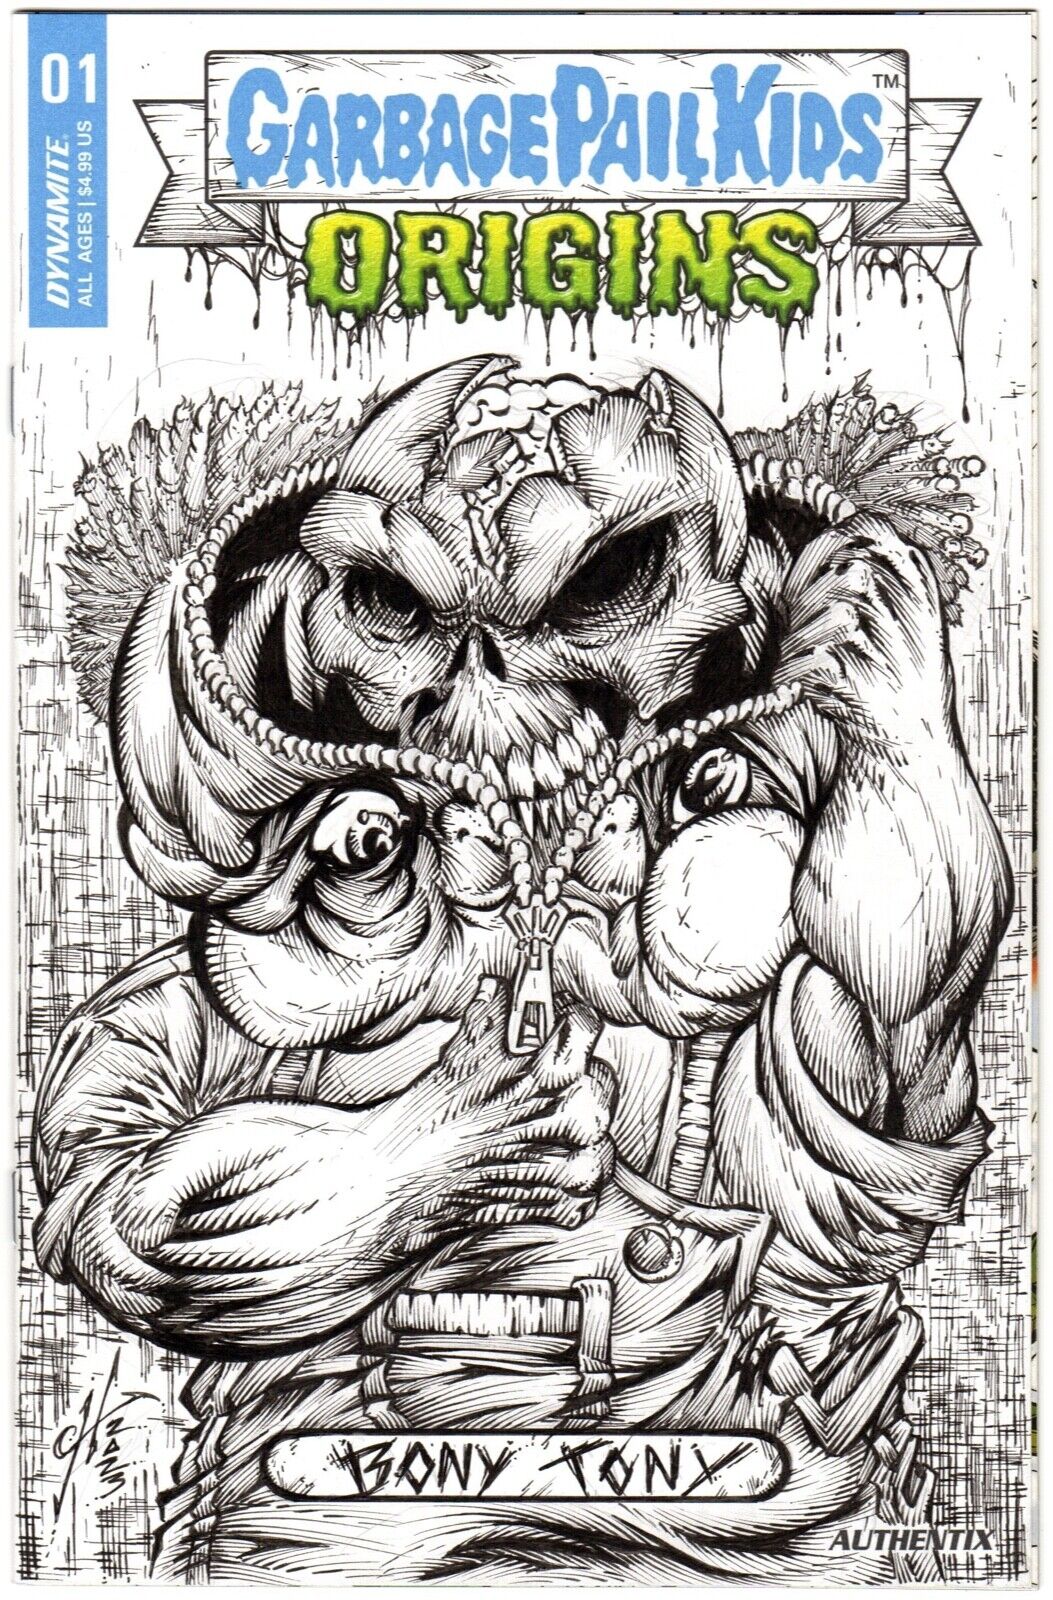 Garbage Pail Kids Origins #01. Original sketch cover art by Calvin Henio.